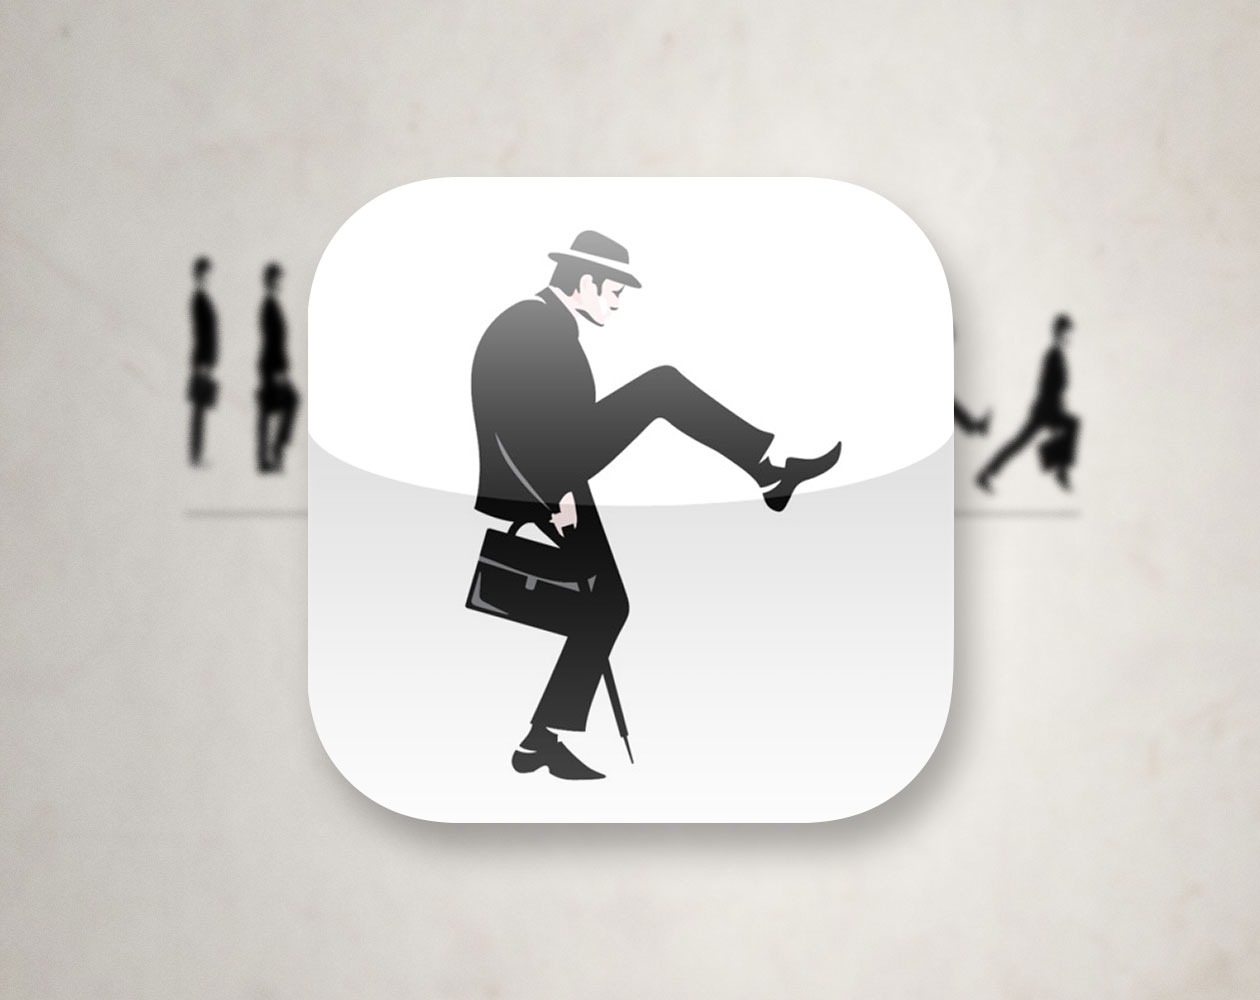 Monty Python's The Ministry of Silly Walks для iOS - станьте &quot;министром глупых походок&quot;